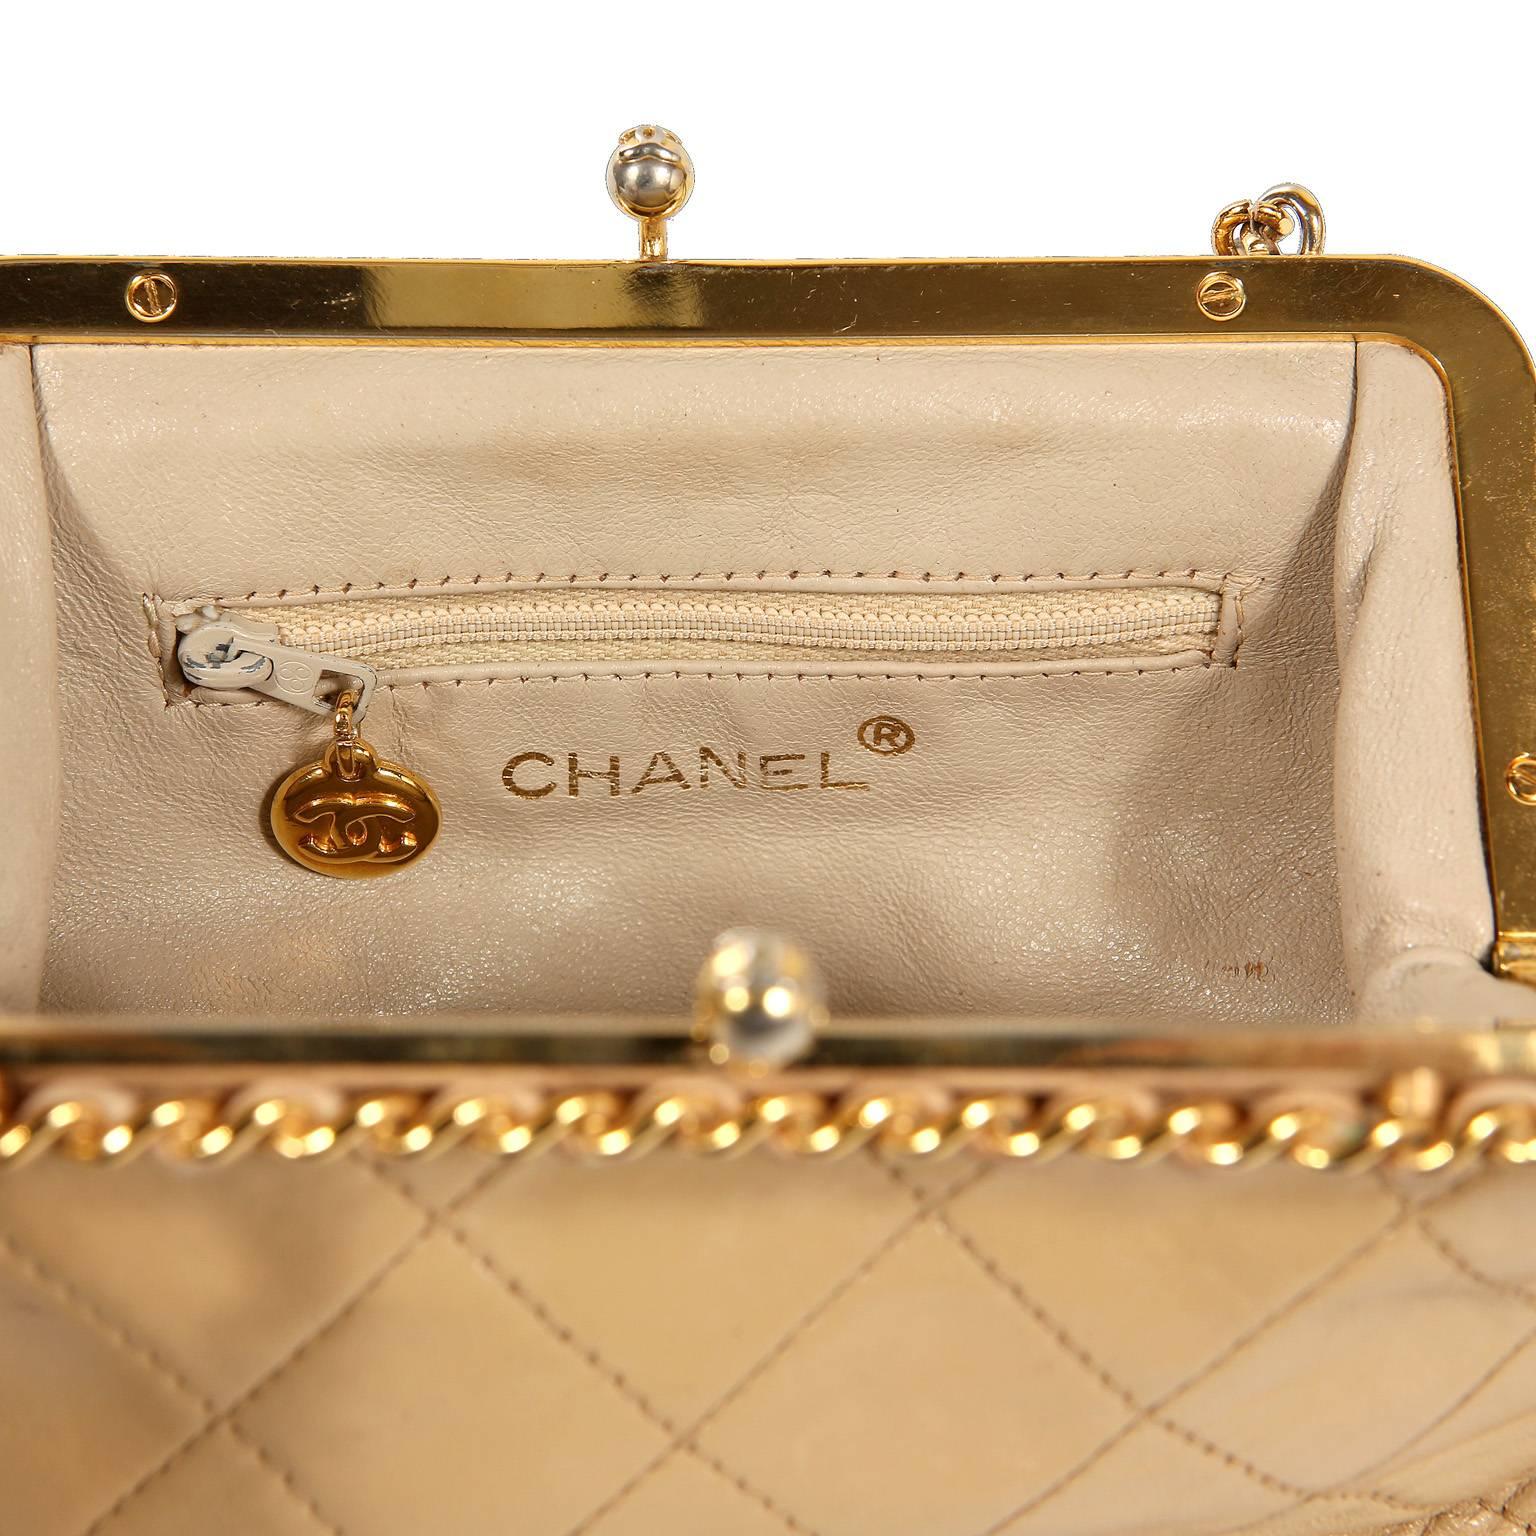 Chanel Beige Leather Kiss Lock Bag 4